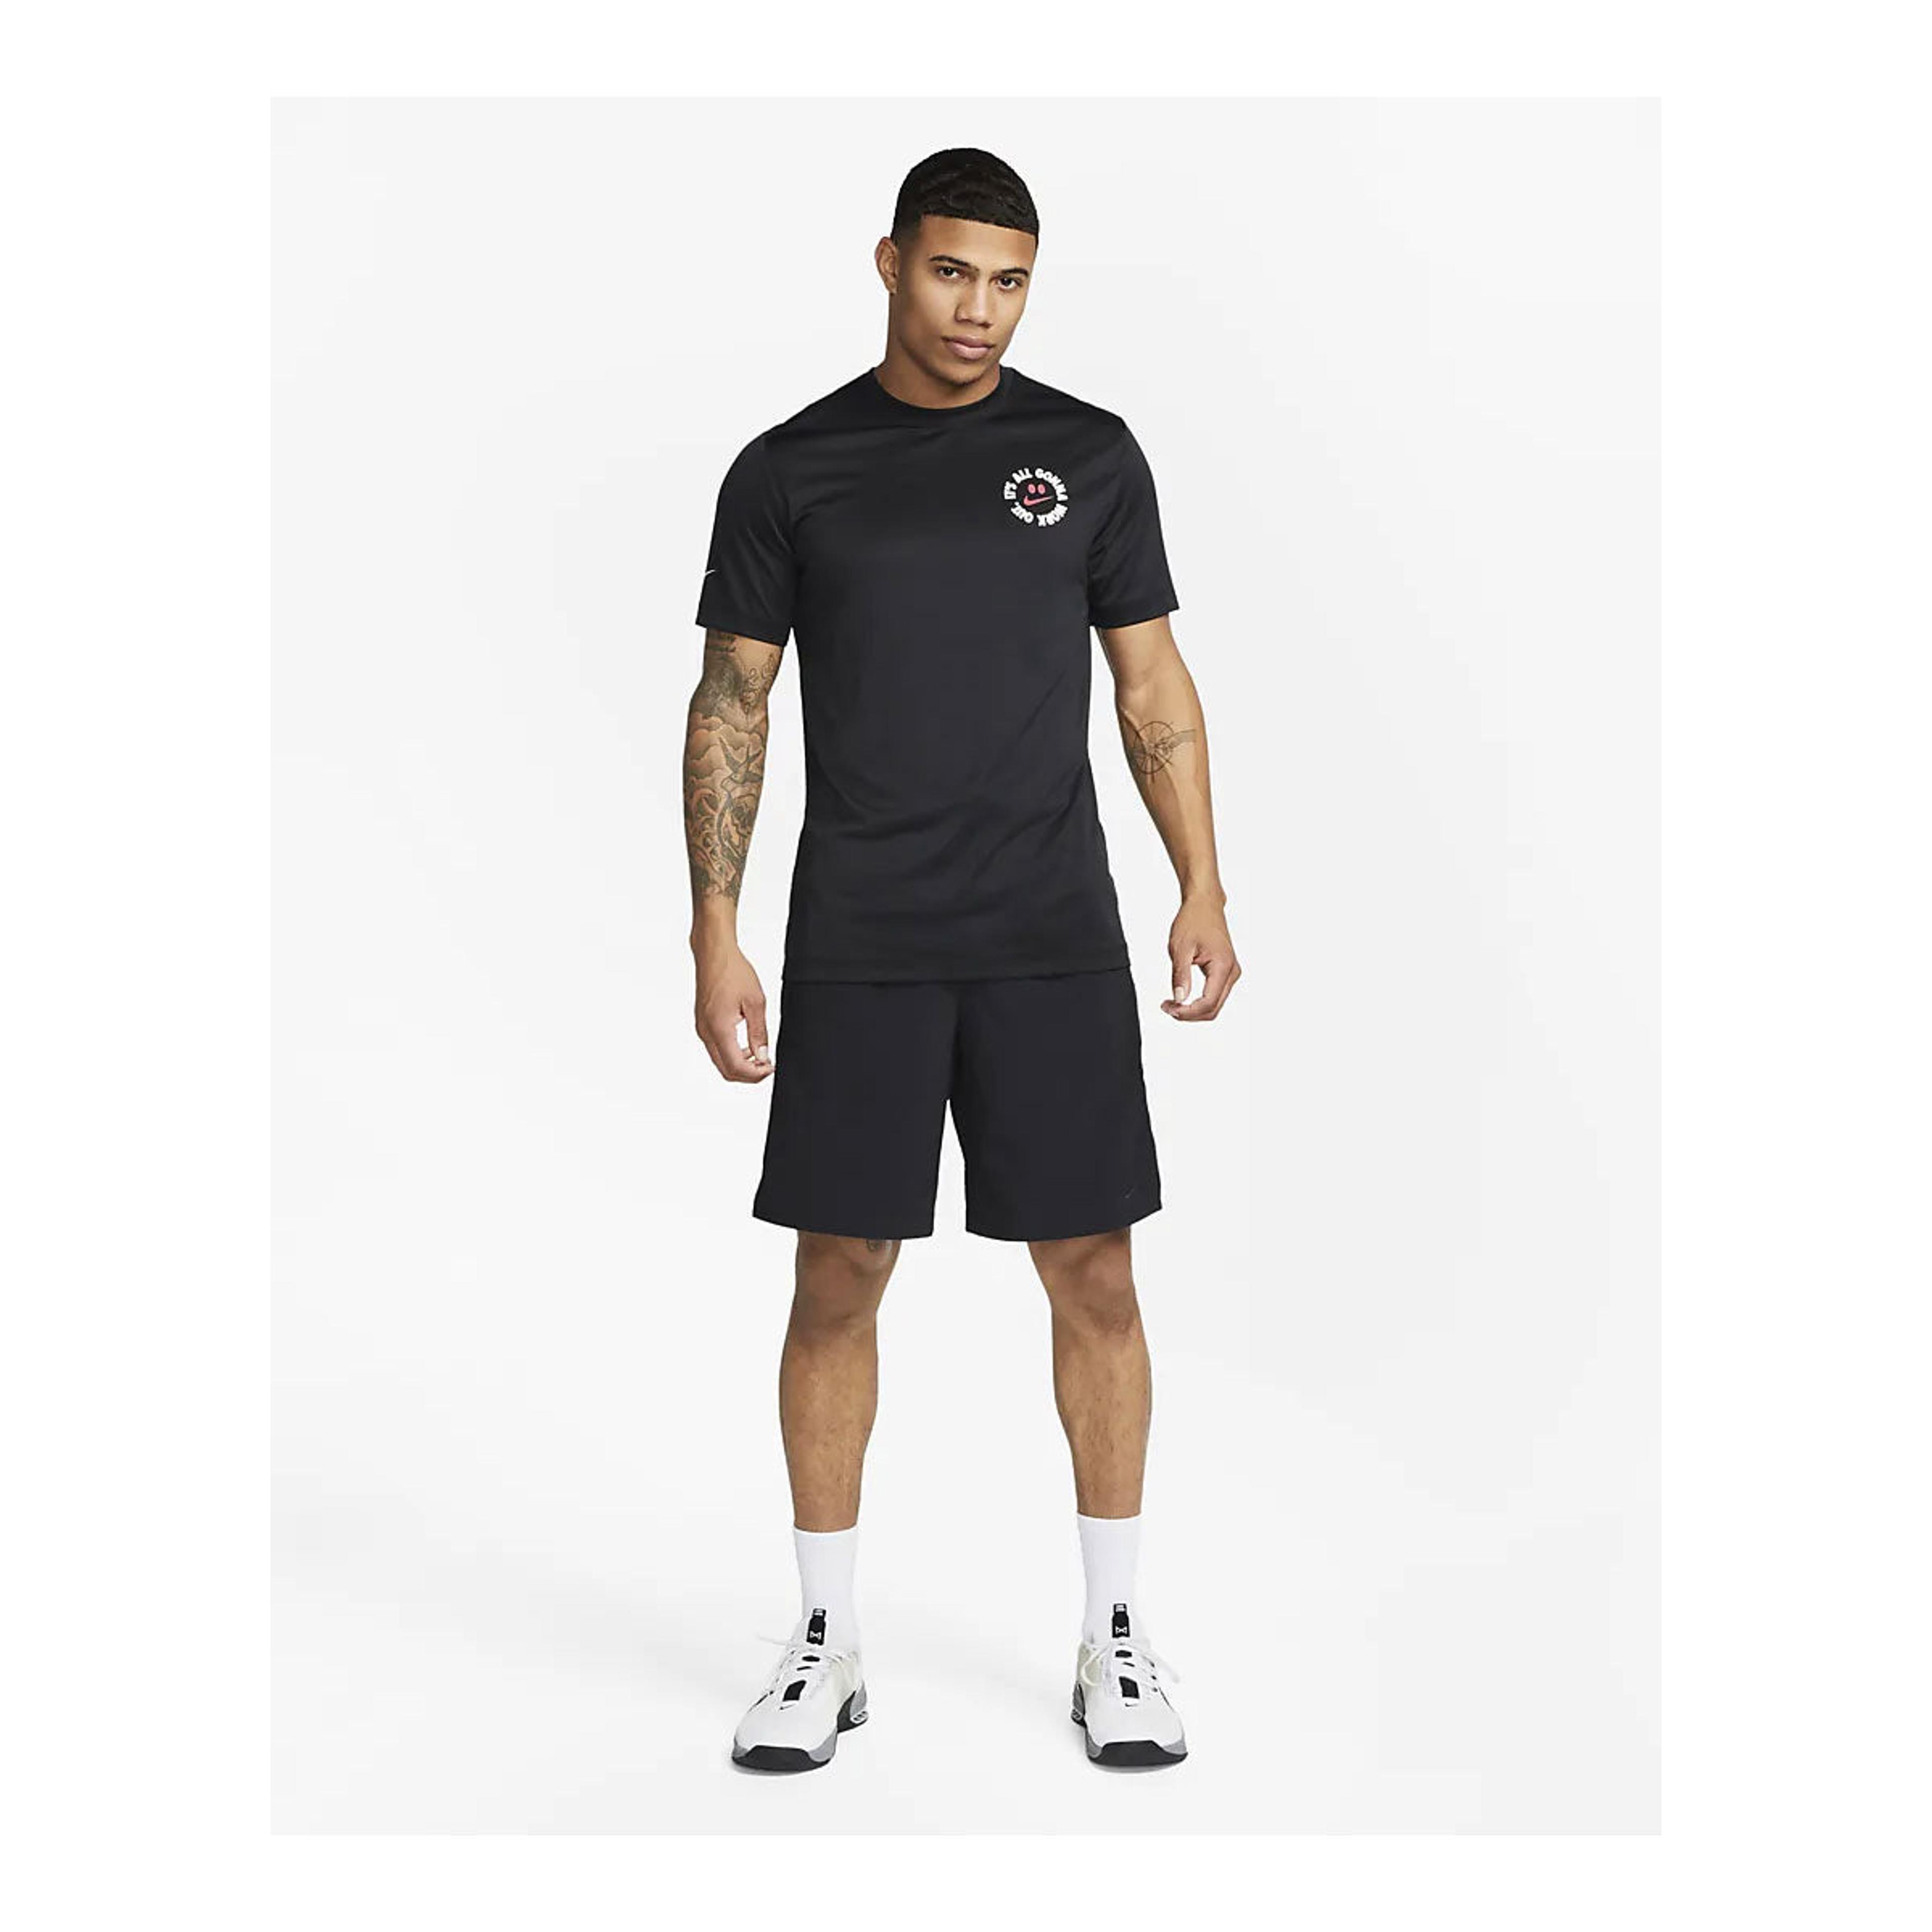 Alternate View 1 of Nike Men's Dri-Fit Fitness T-Shirt